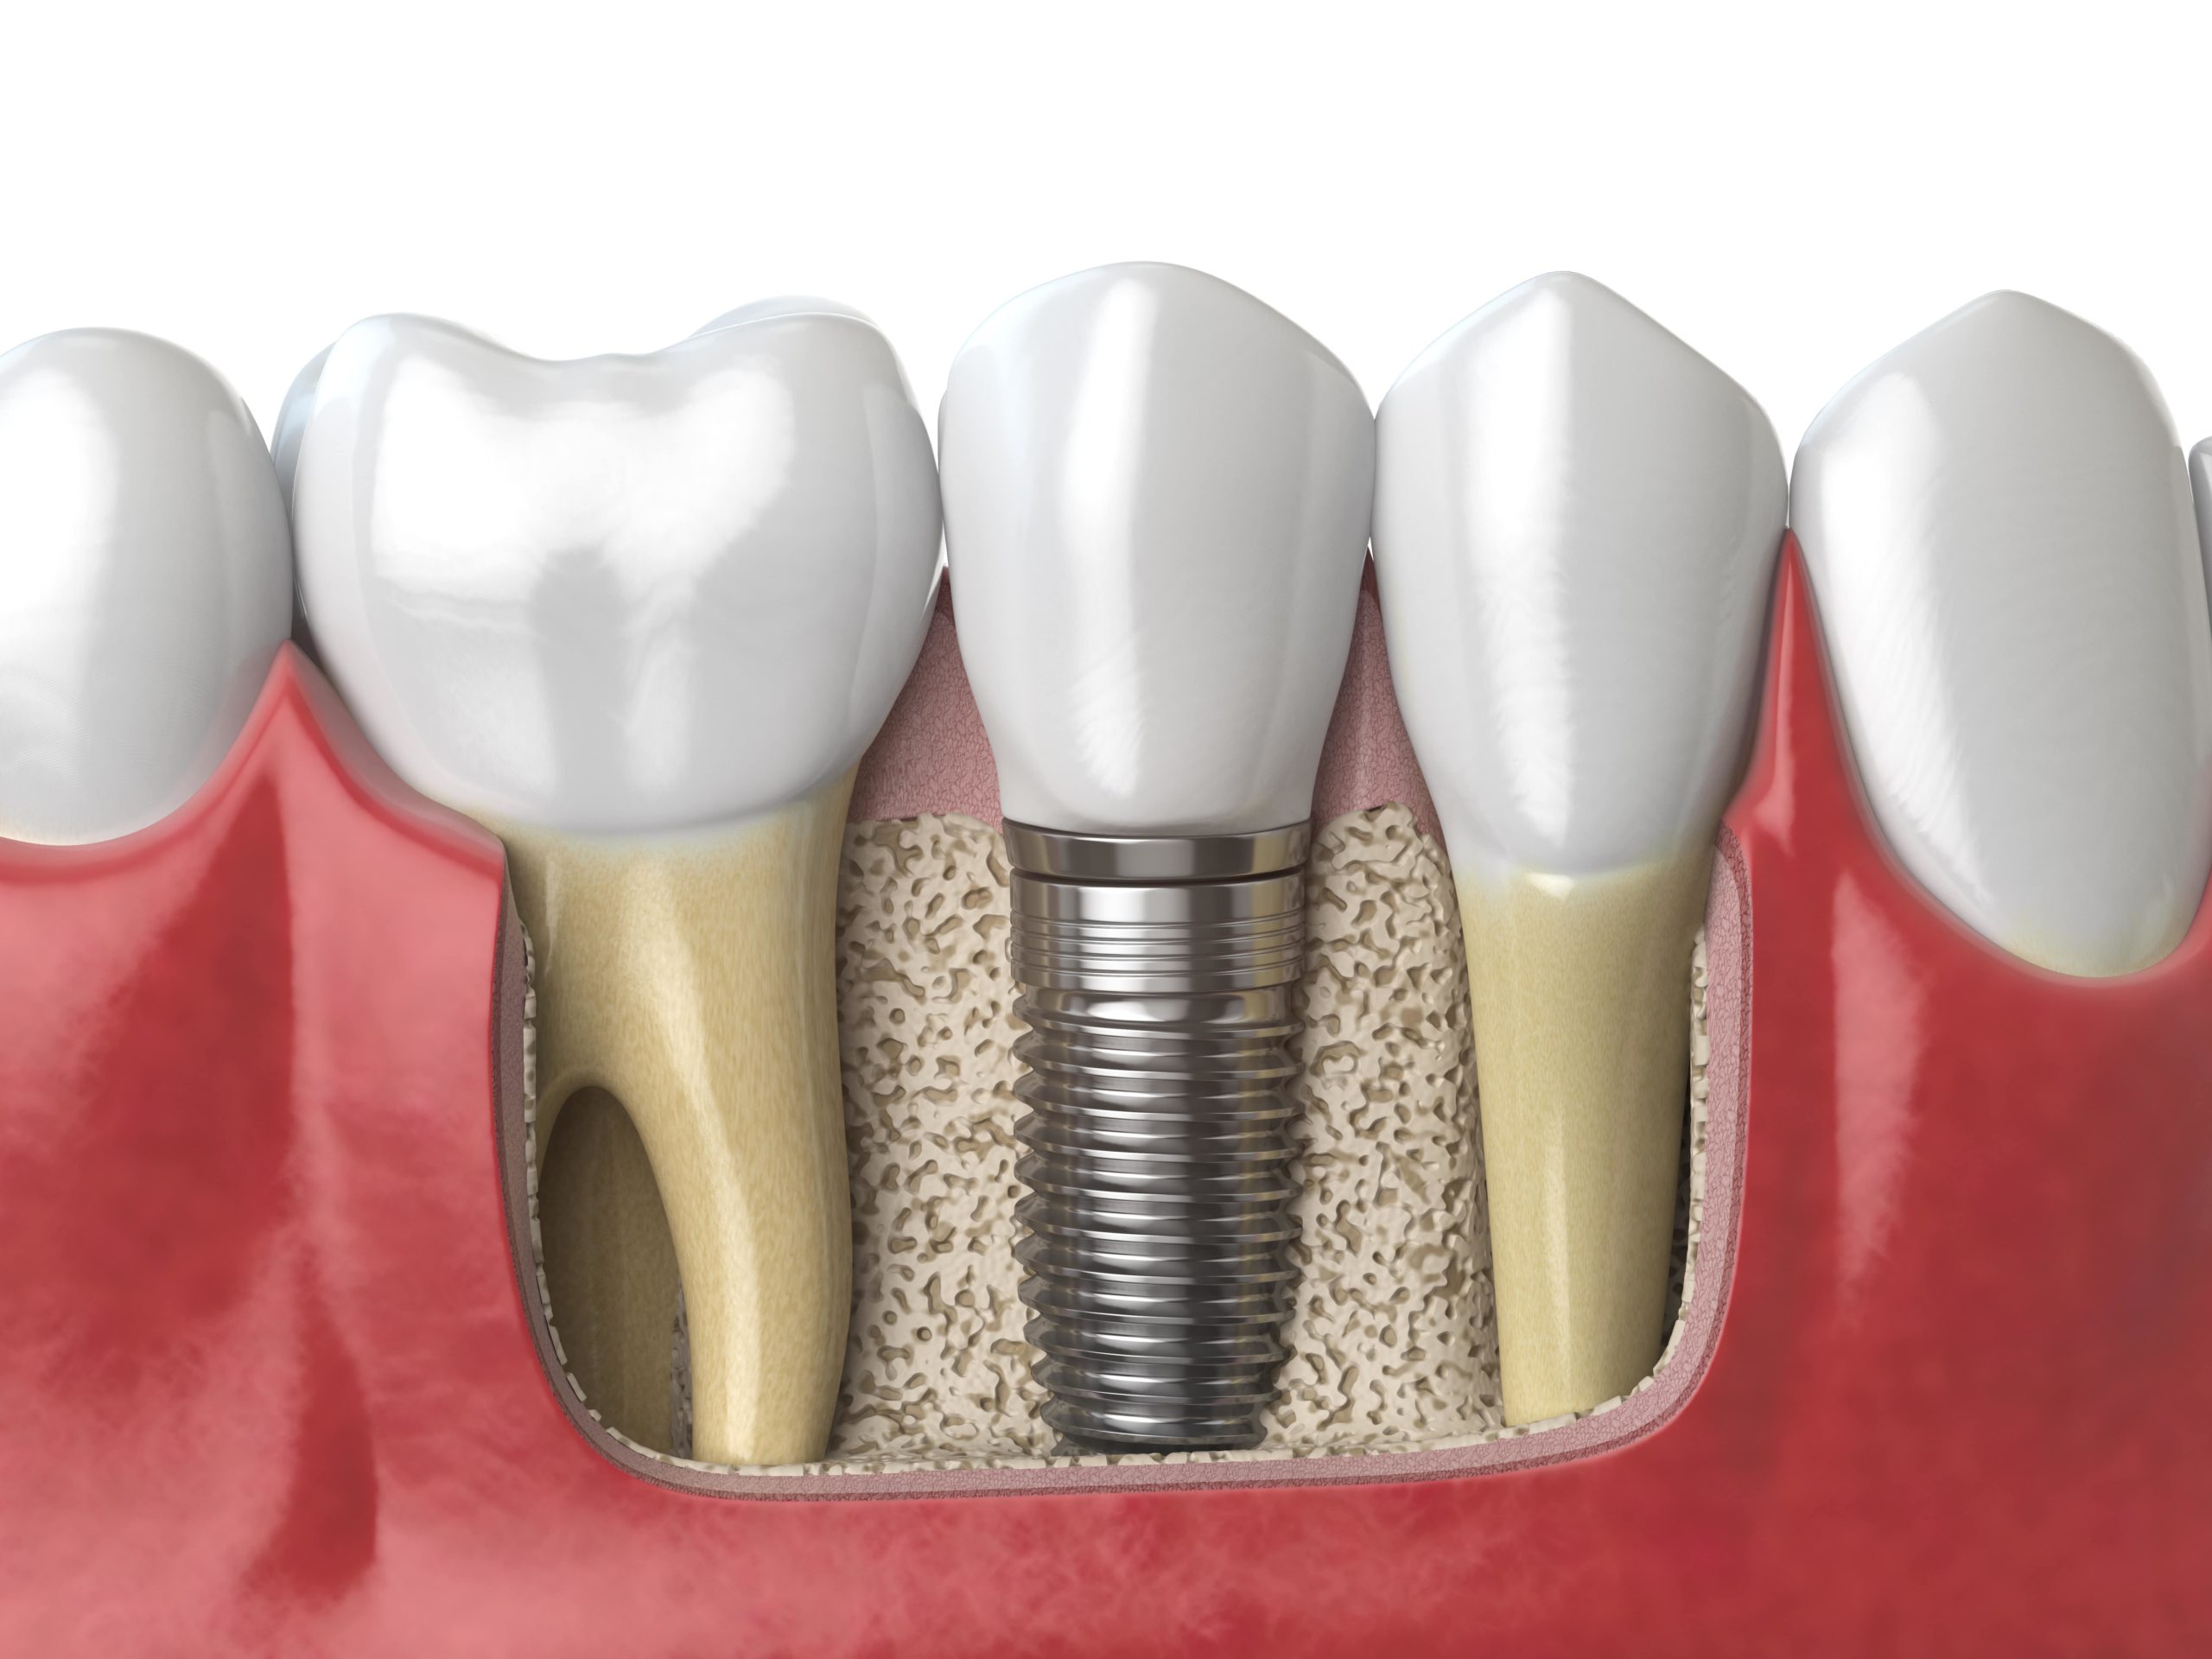 The best dental implants in